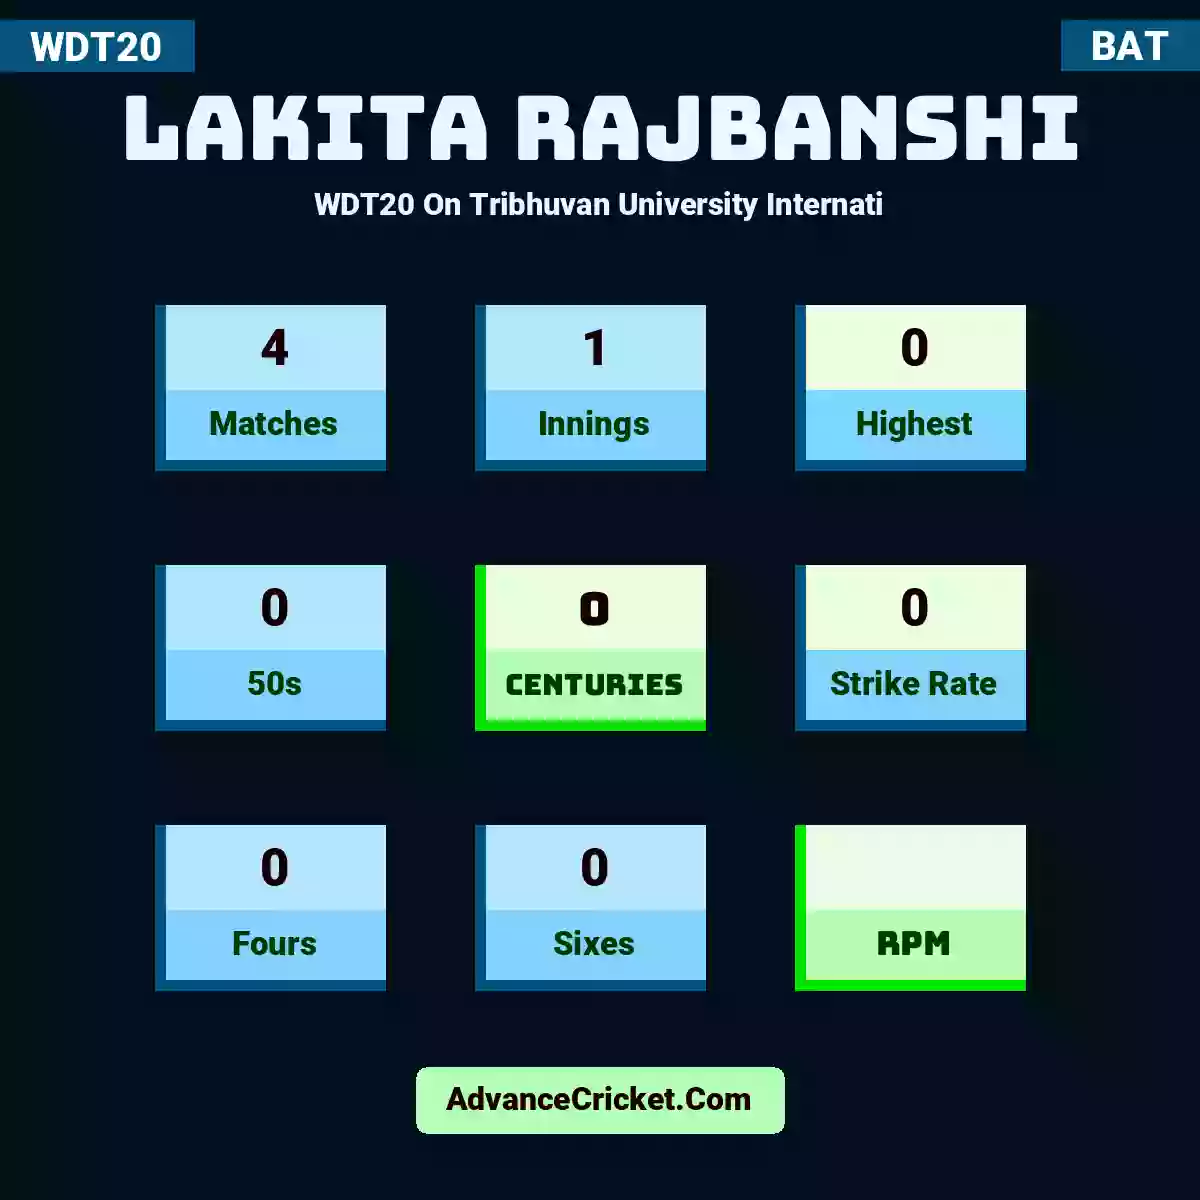 Lakita Rajbanshi WDT20  On Tribhuvan University Internati, Lakita Rajbanshi played 4 matches, scored 0 runs as highest, 0 half-centuries, and 0 centuries, with a strike rate of 0. L.Rajbanshi hit 0 fours and 0 sixes.